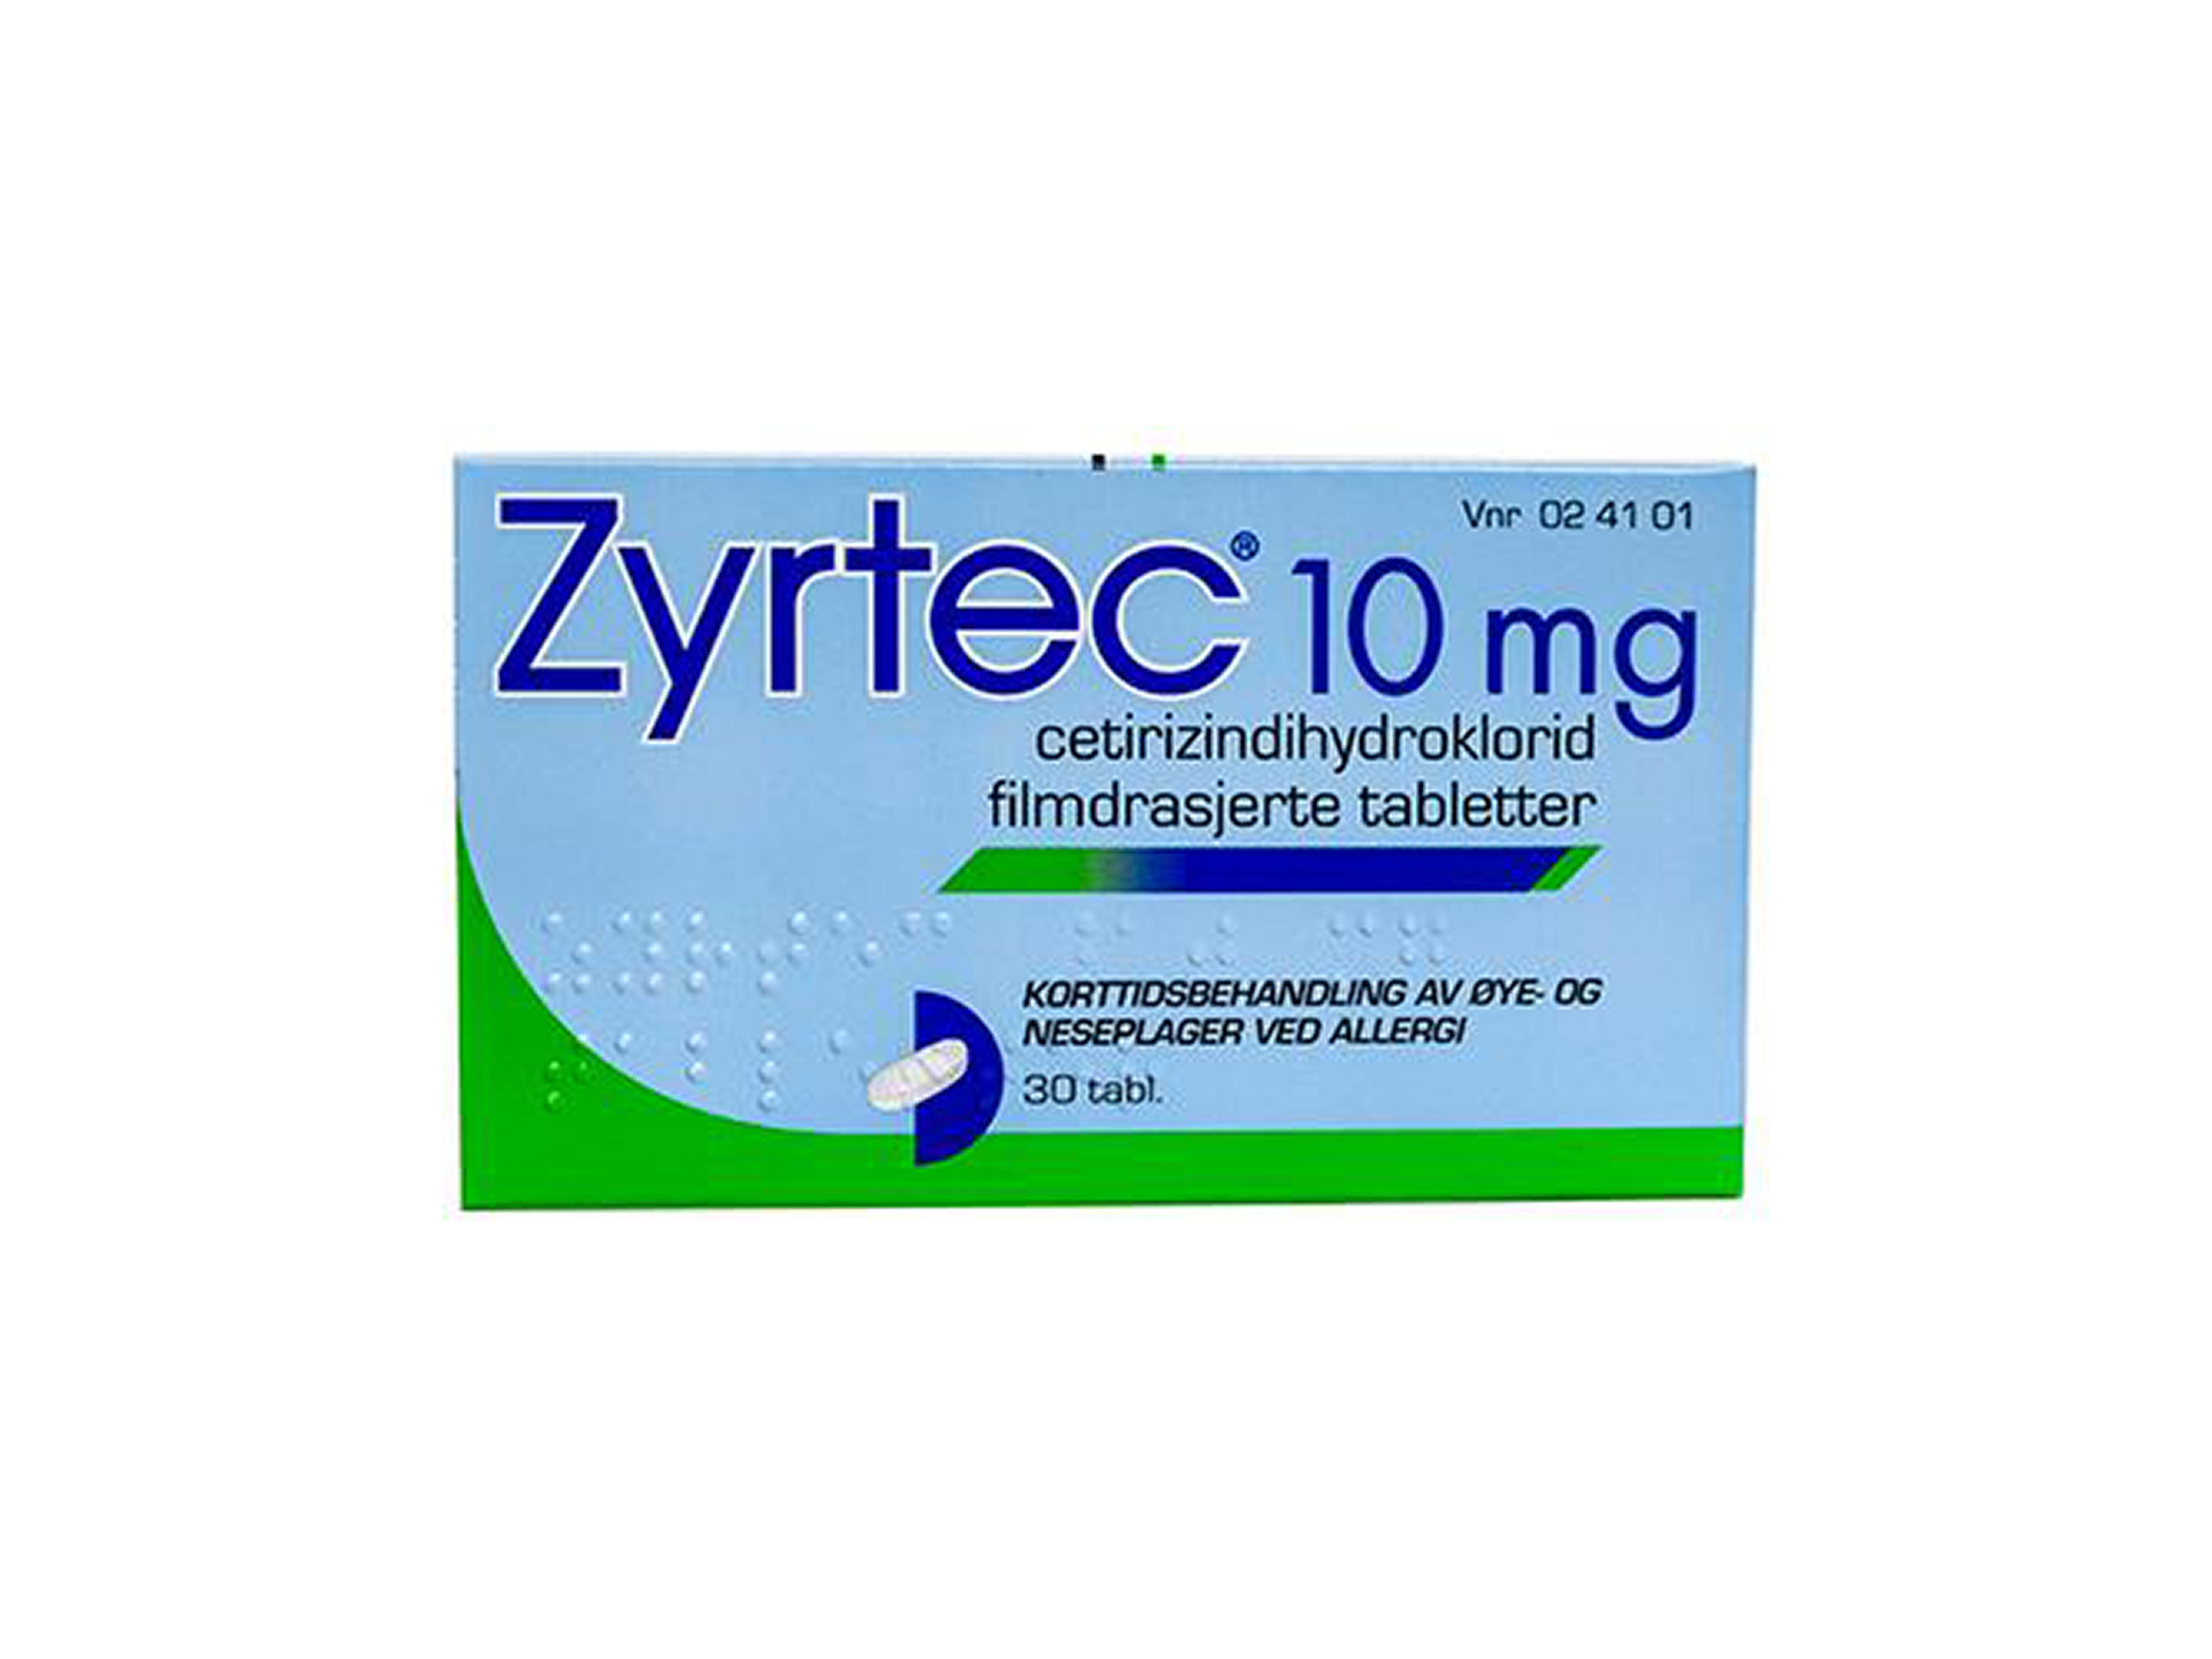 Zyrtec 10 mg tabletter, 30 stk.